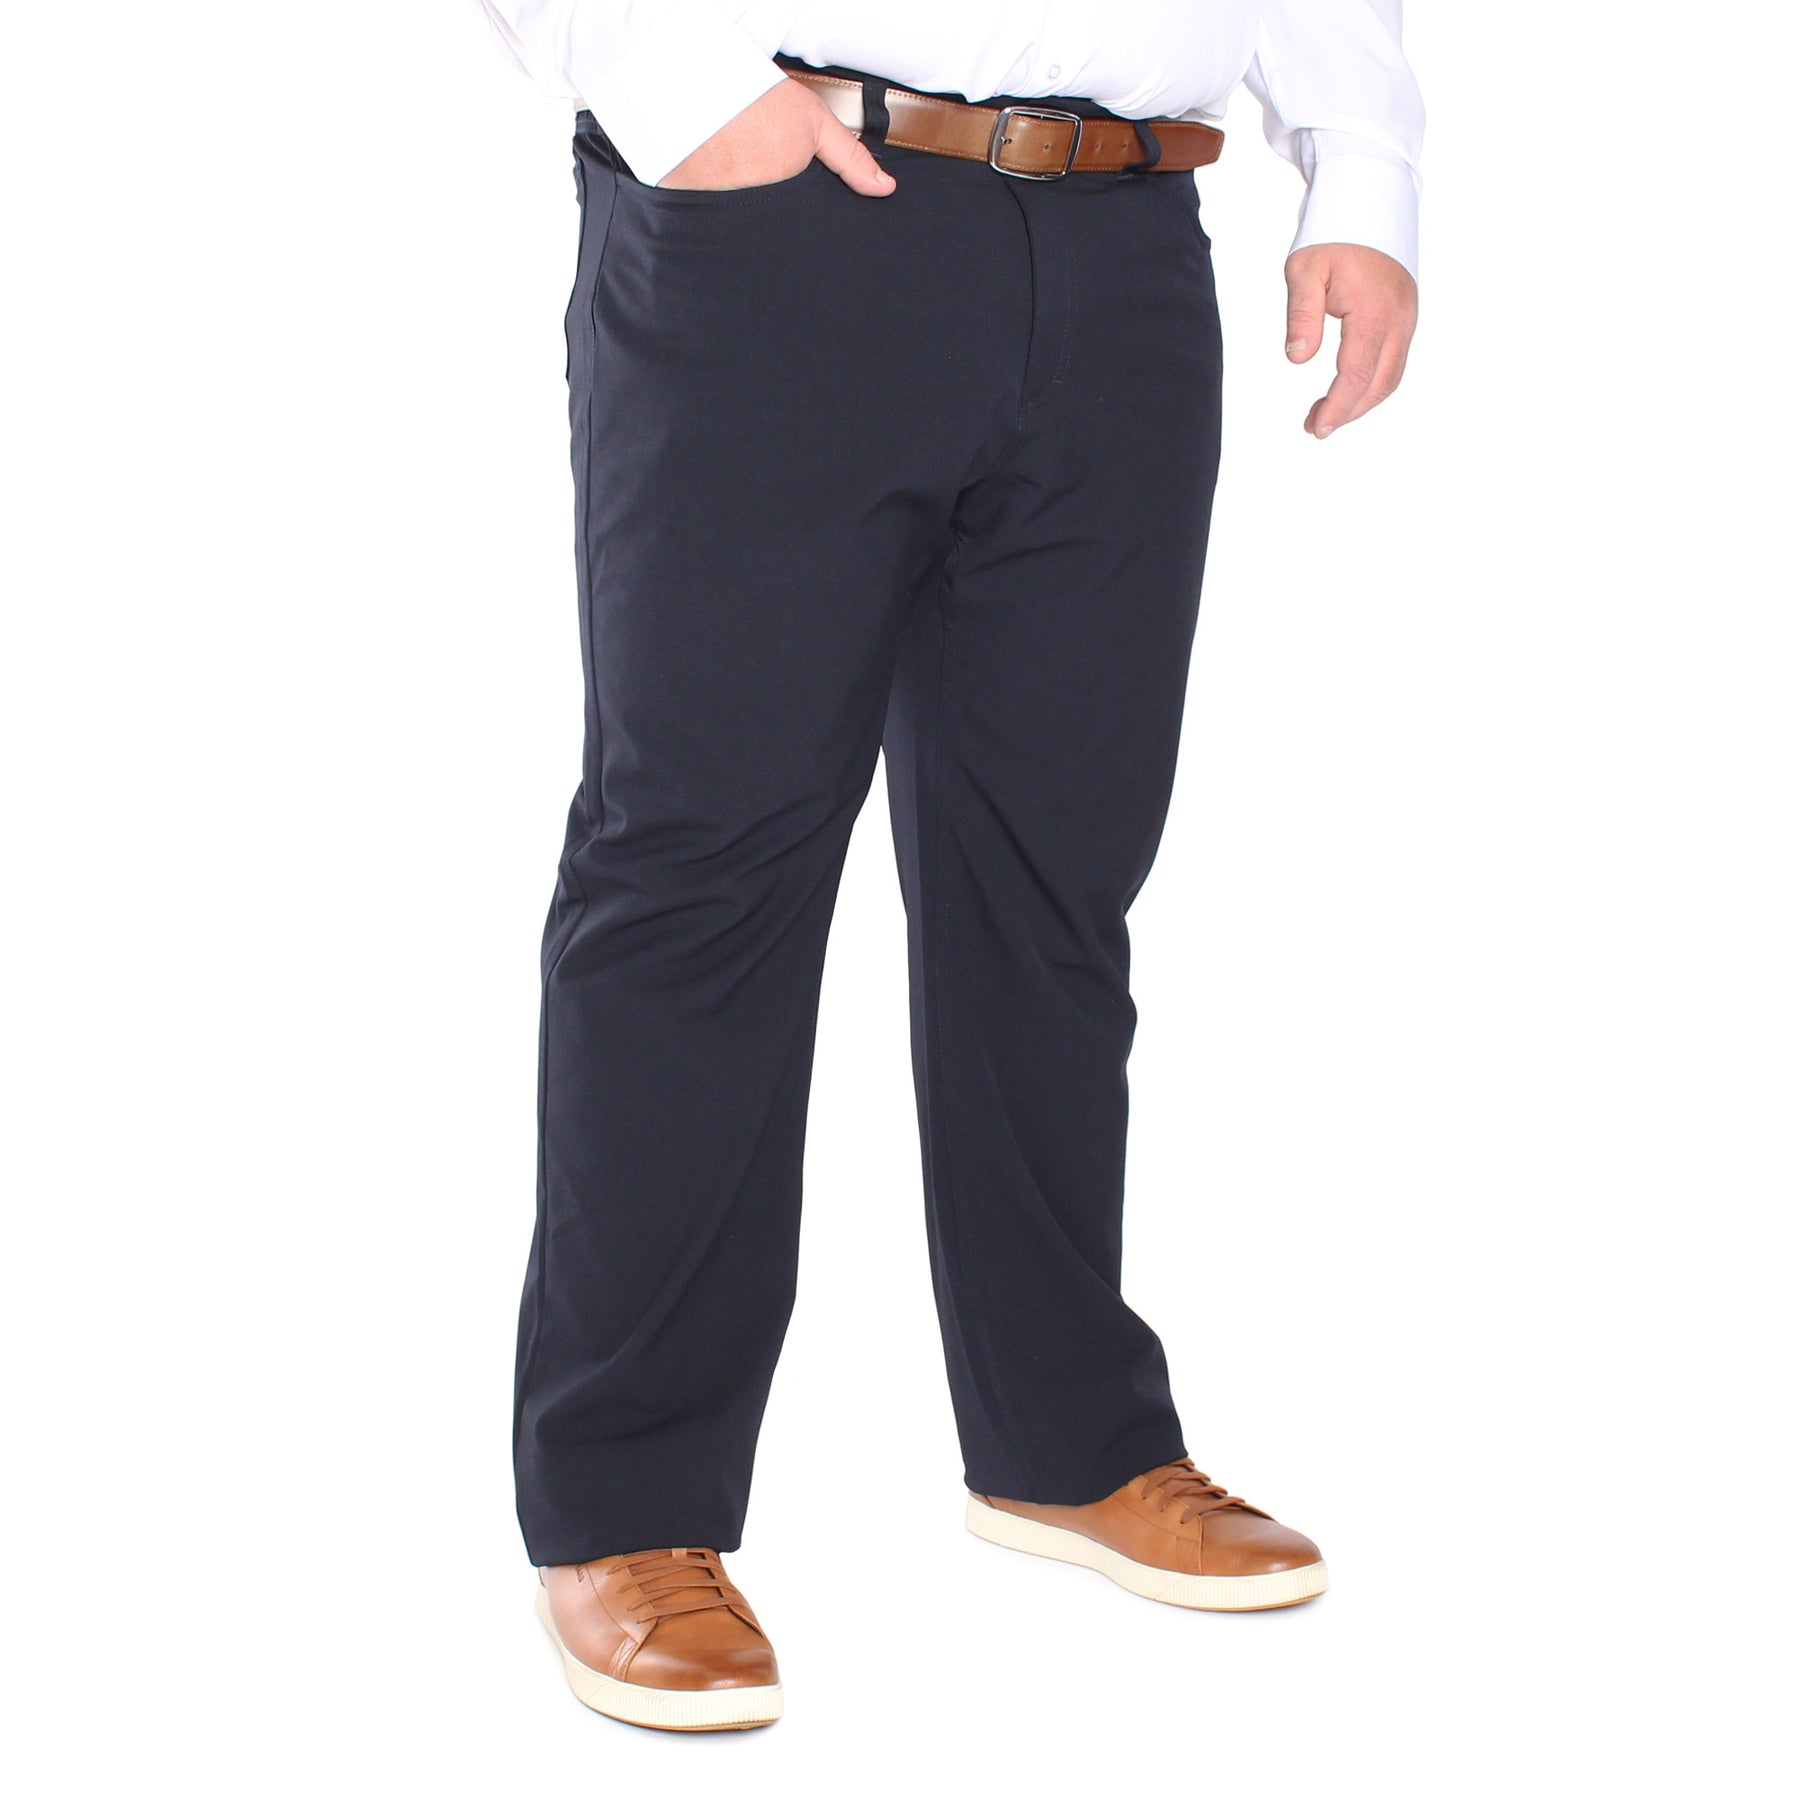 Pantalon extensible, taille régulière et jambe relaxe